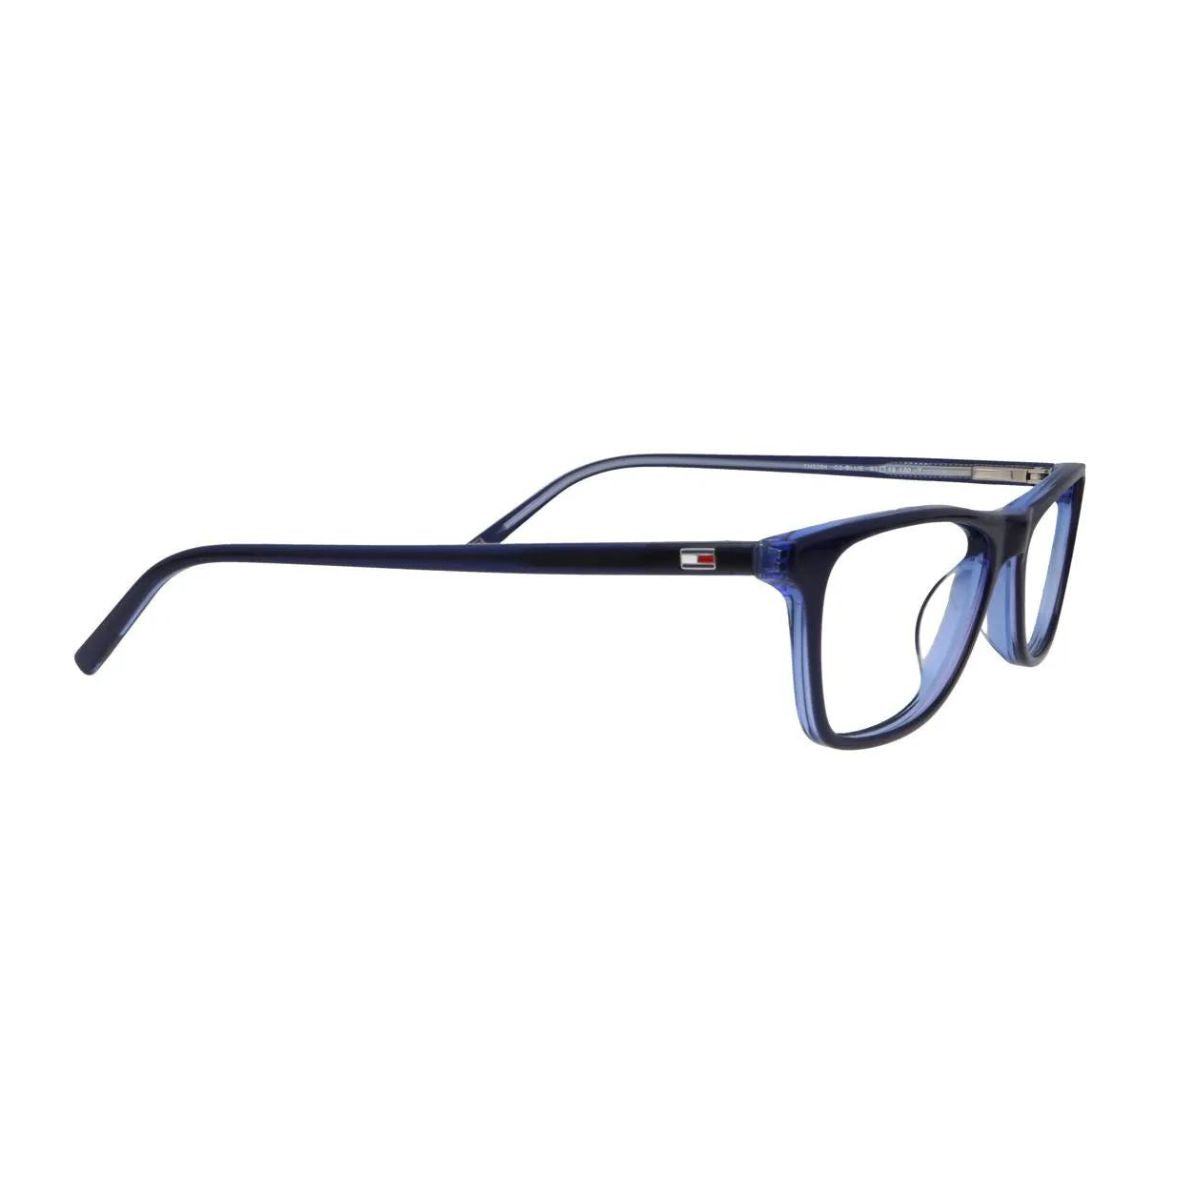 "buy Tommy Hilfiger 3204 C4 square eyeglasses frame for men and women at optorium"